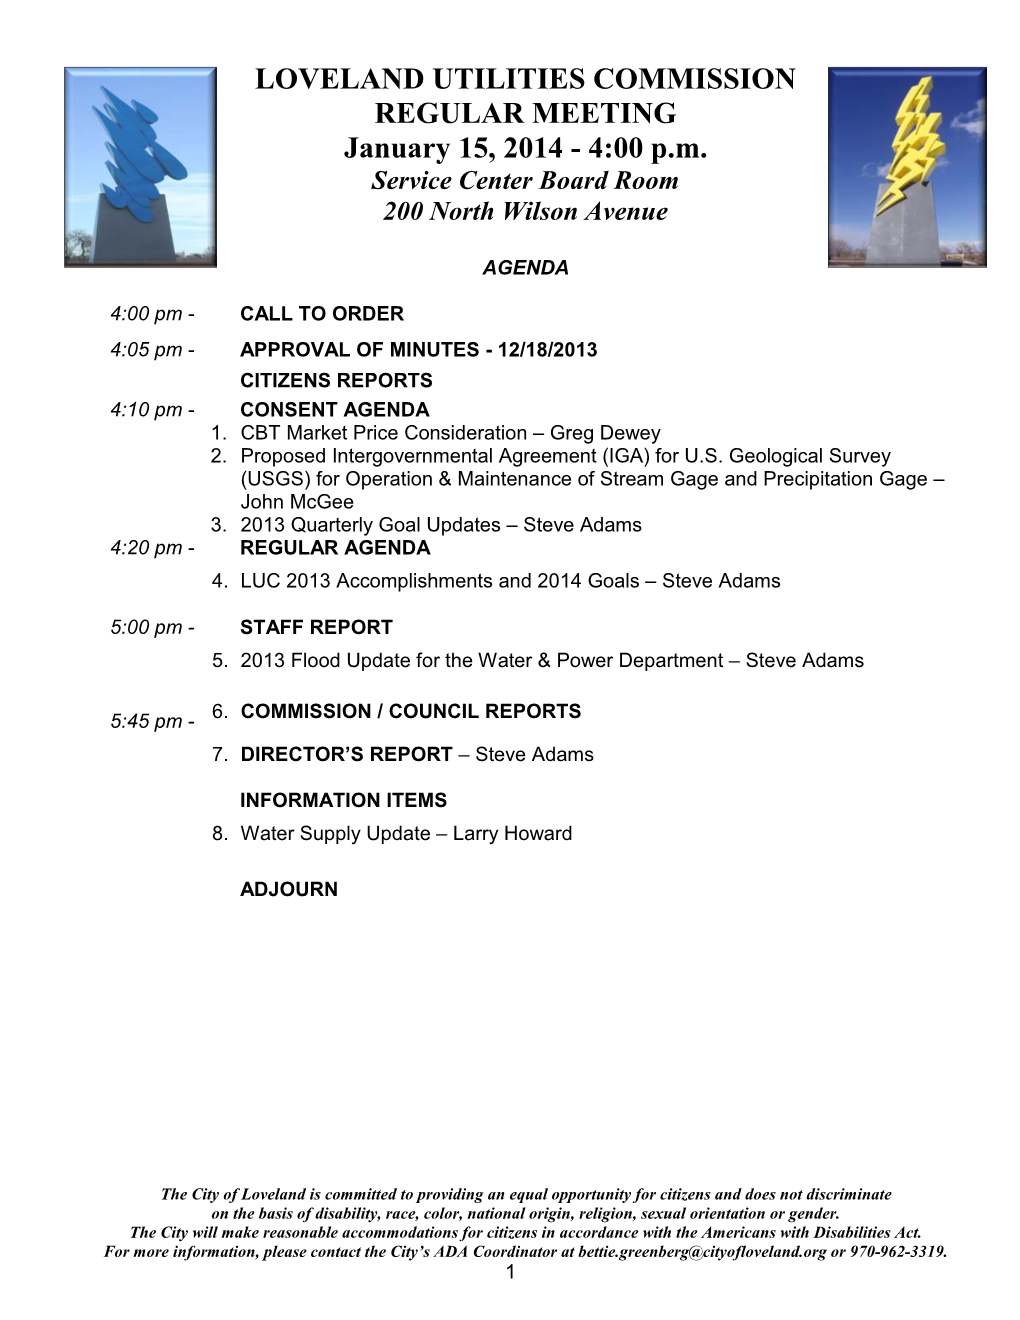 LOVELAND UTILITIES COMMISSION REGULAR MEETING January 15, 2014 - 4:00 P.M